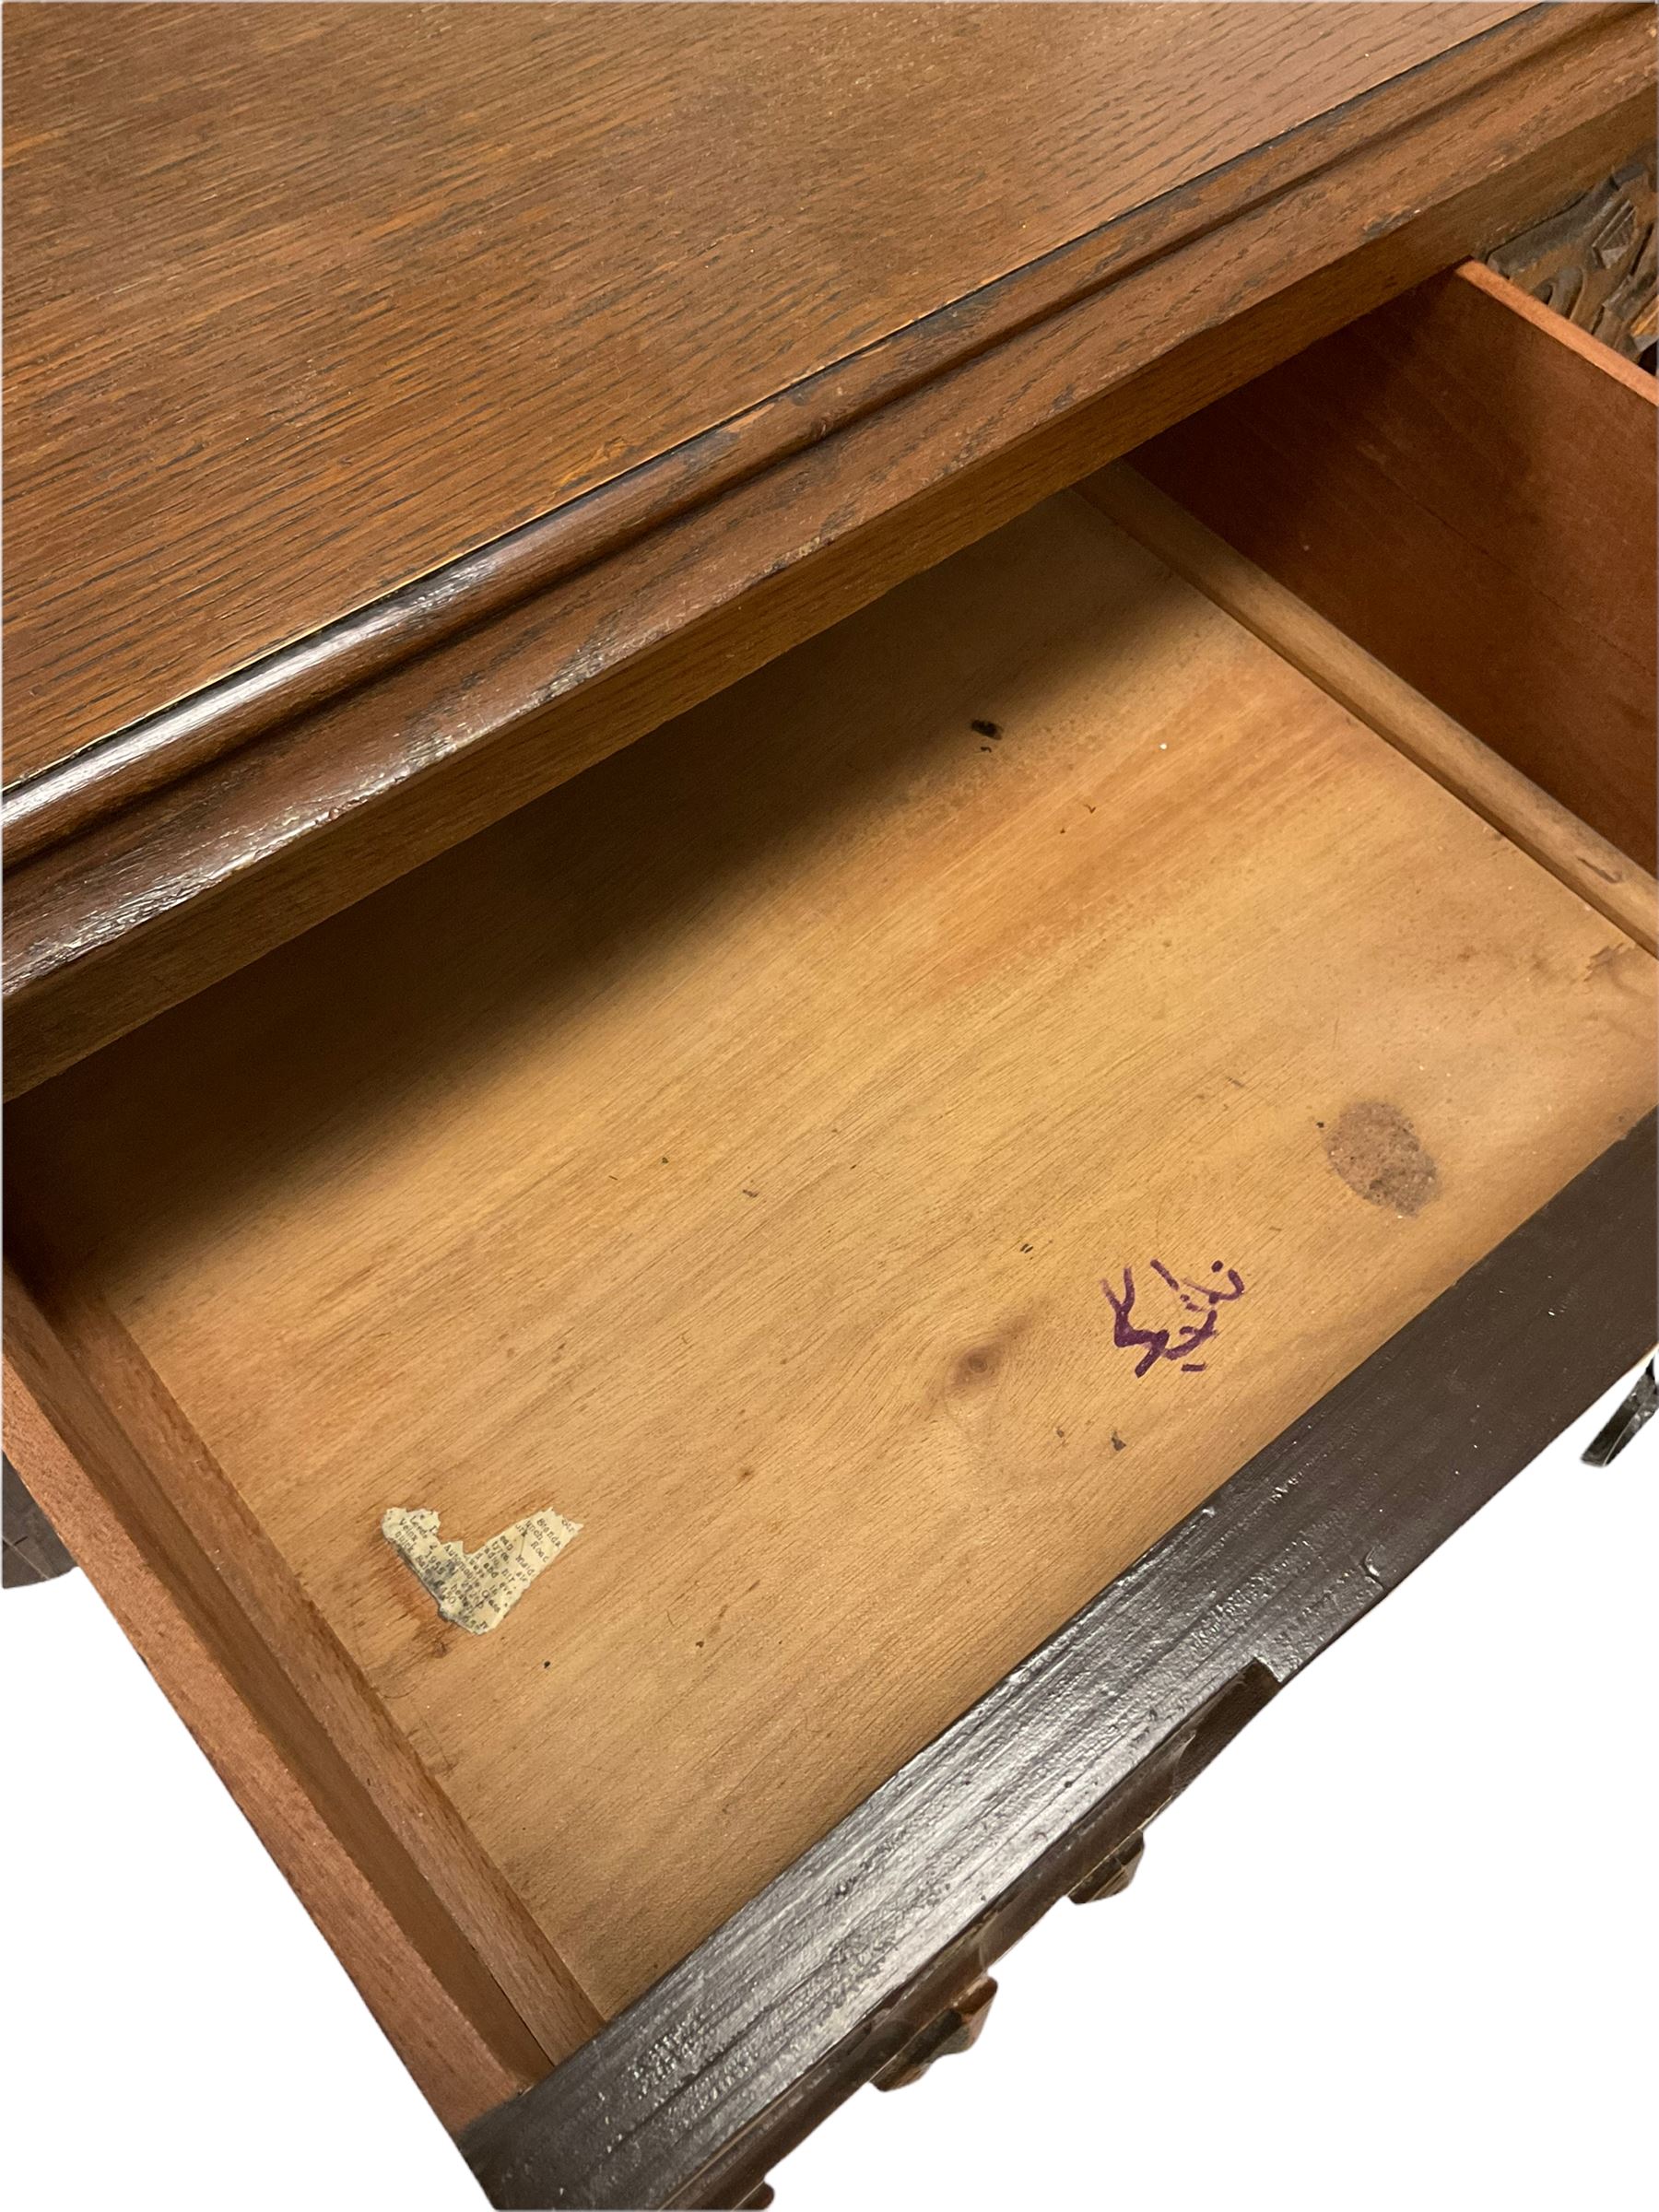 Oak mirror back dresser - Image 4 of 4